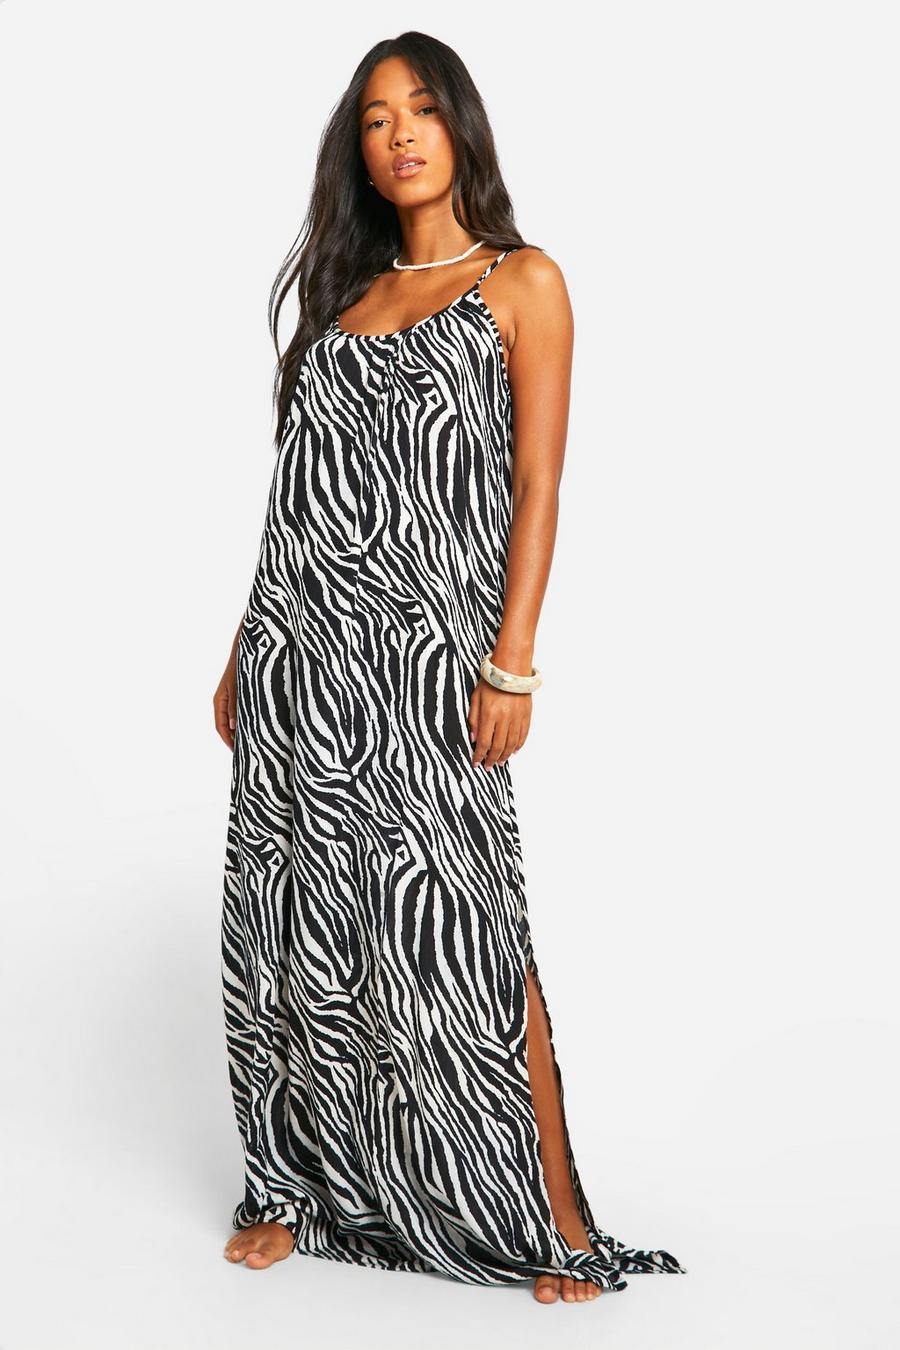 Black Zebra Cheesecloth Beach Maxi Dress